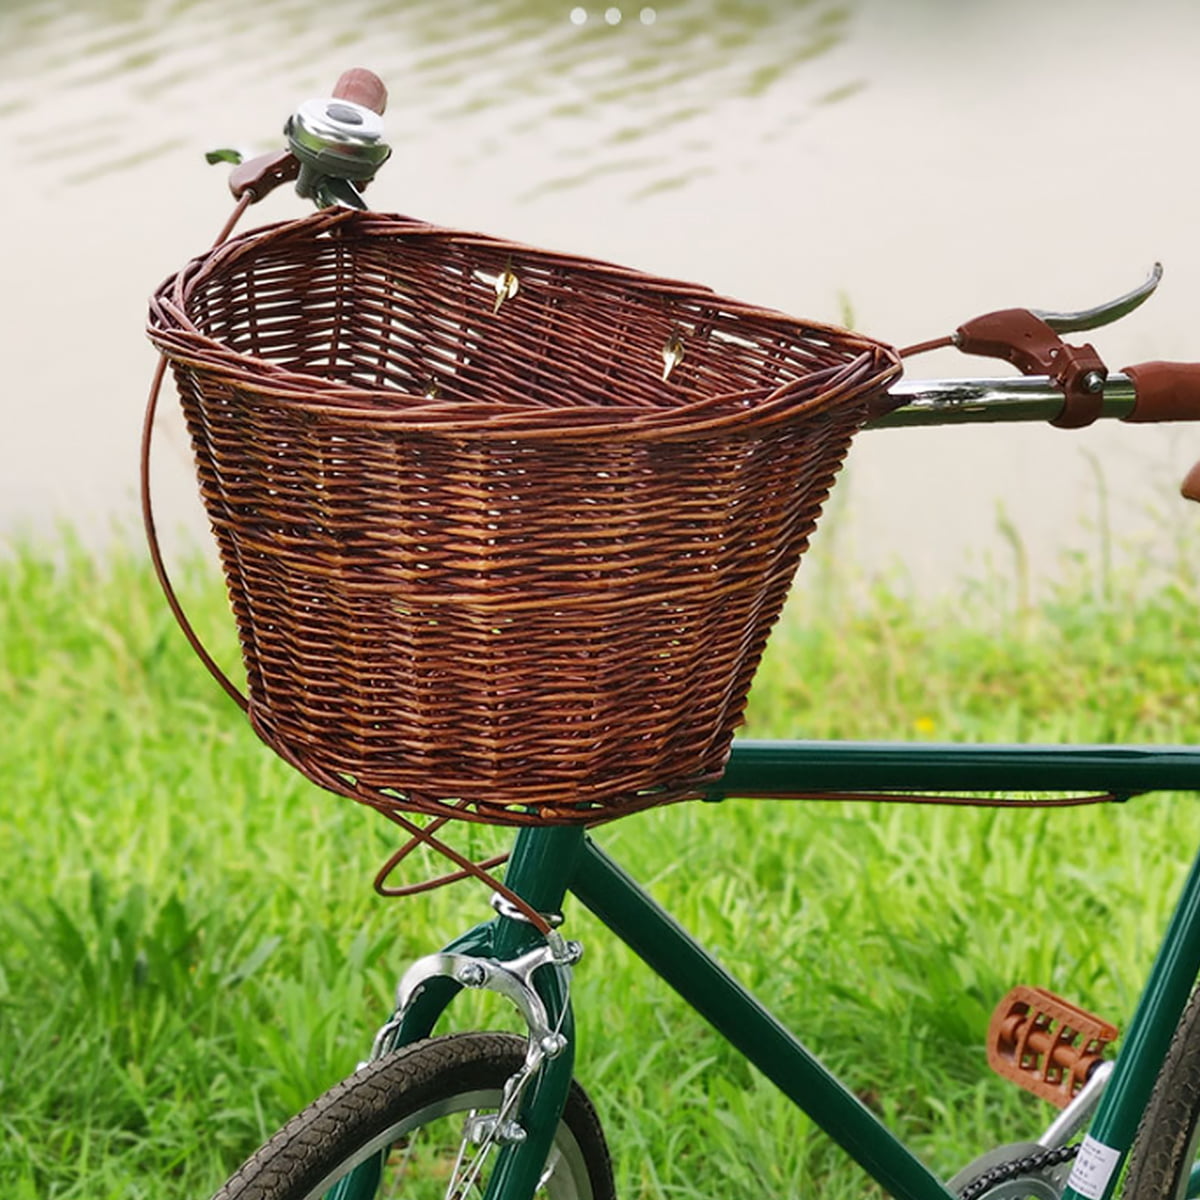 Retro Hand-Woven Wicker Bicycle Storage Basket Fashionable Waterproof Durable Bike Basket Bicycle Handlebar Case for Adult Men Women Kids Girls Boy Hand-Woven Bicycle Basket 